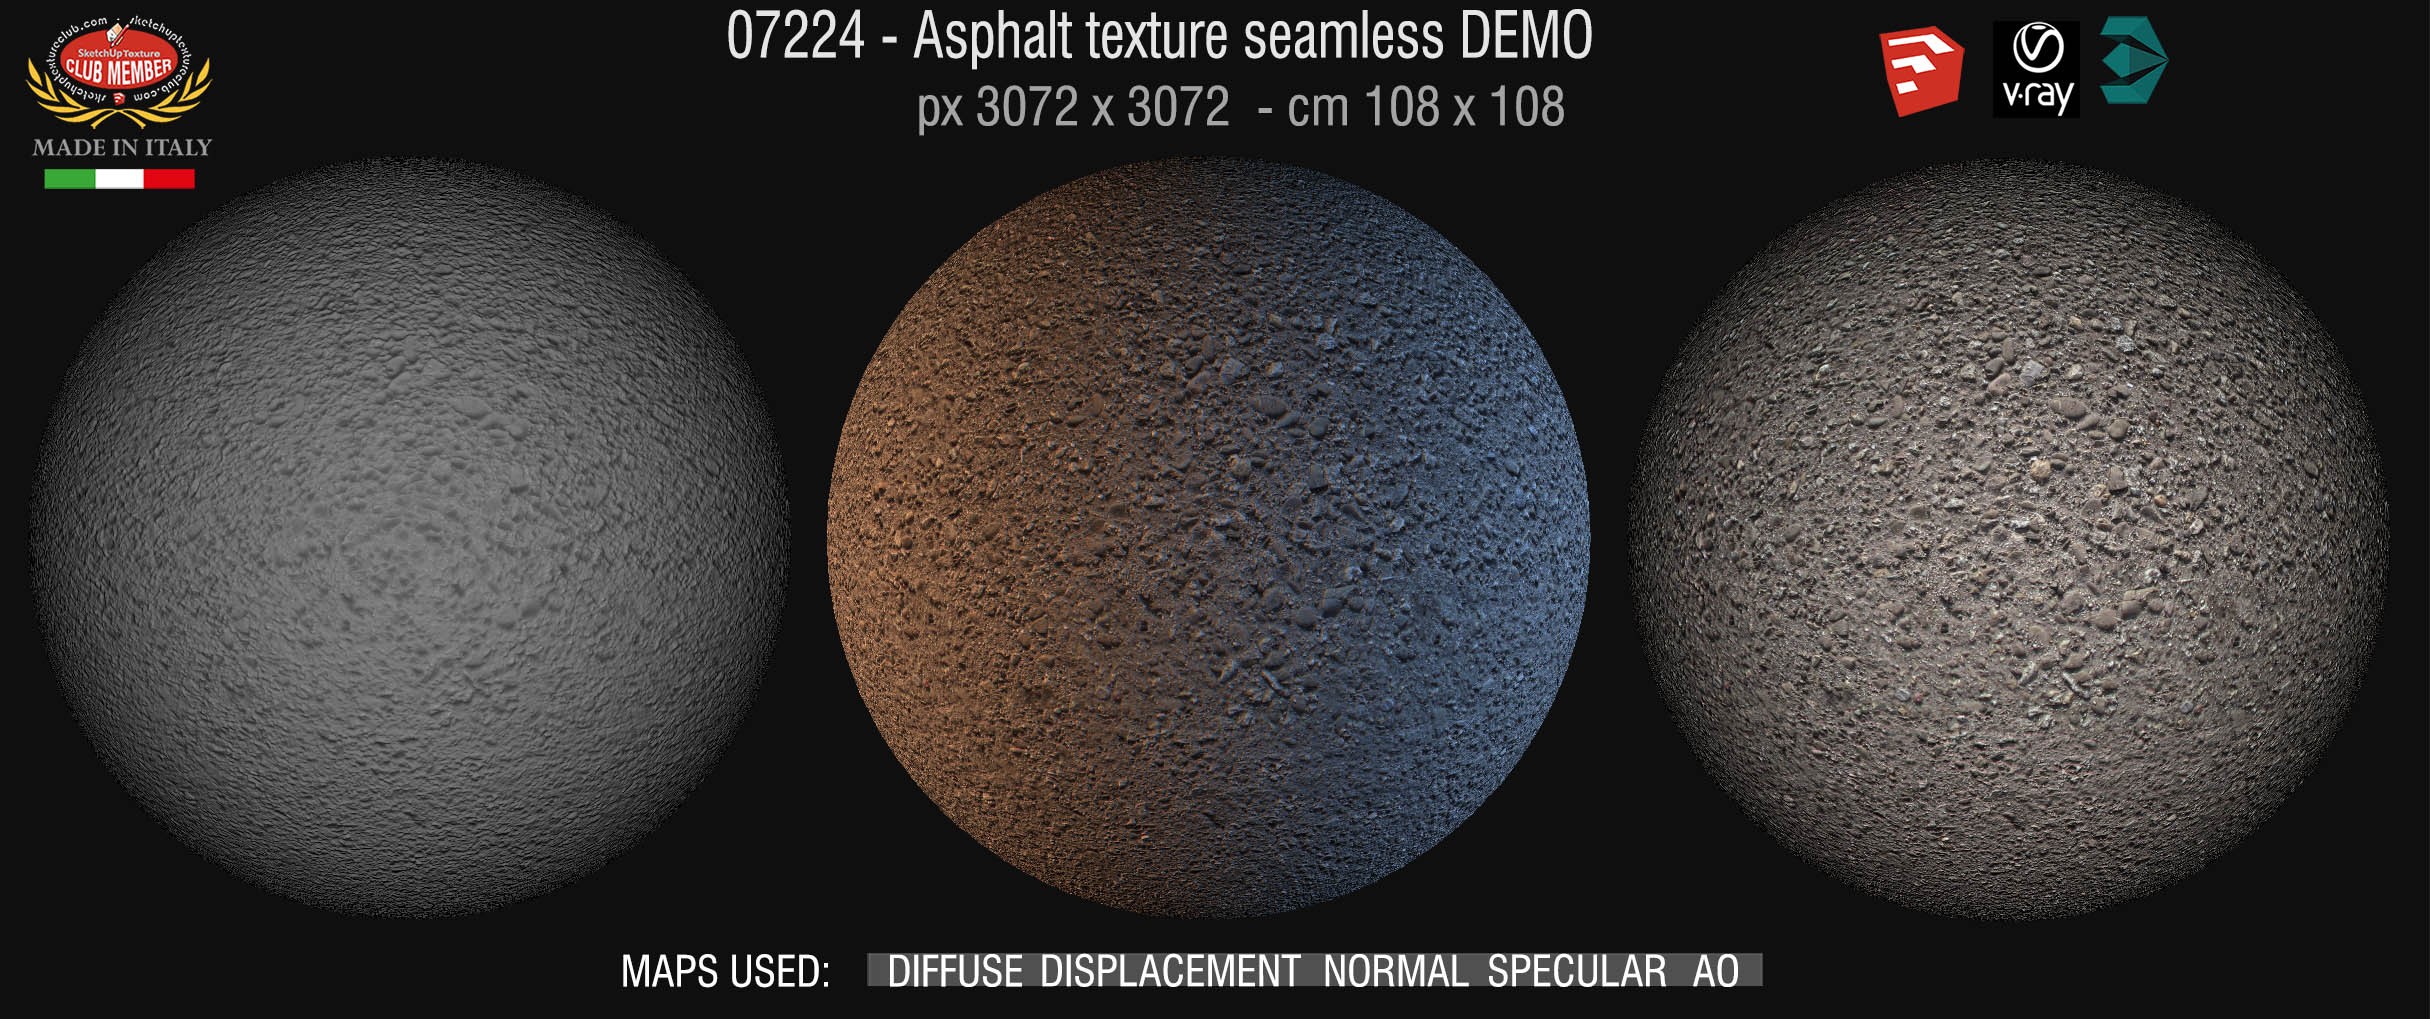 07224 Asphalt texture seamless + maps DEMO